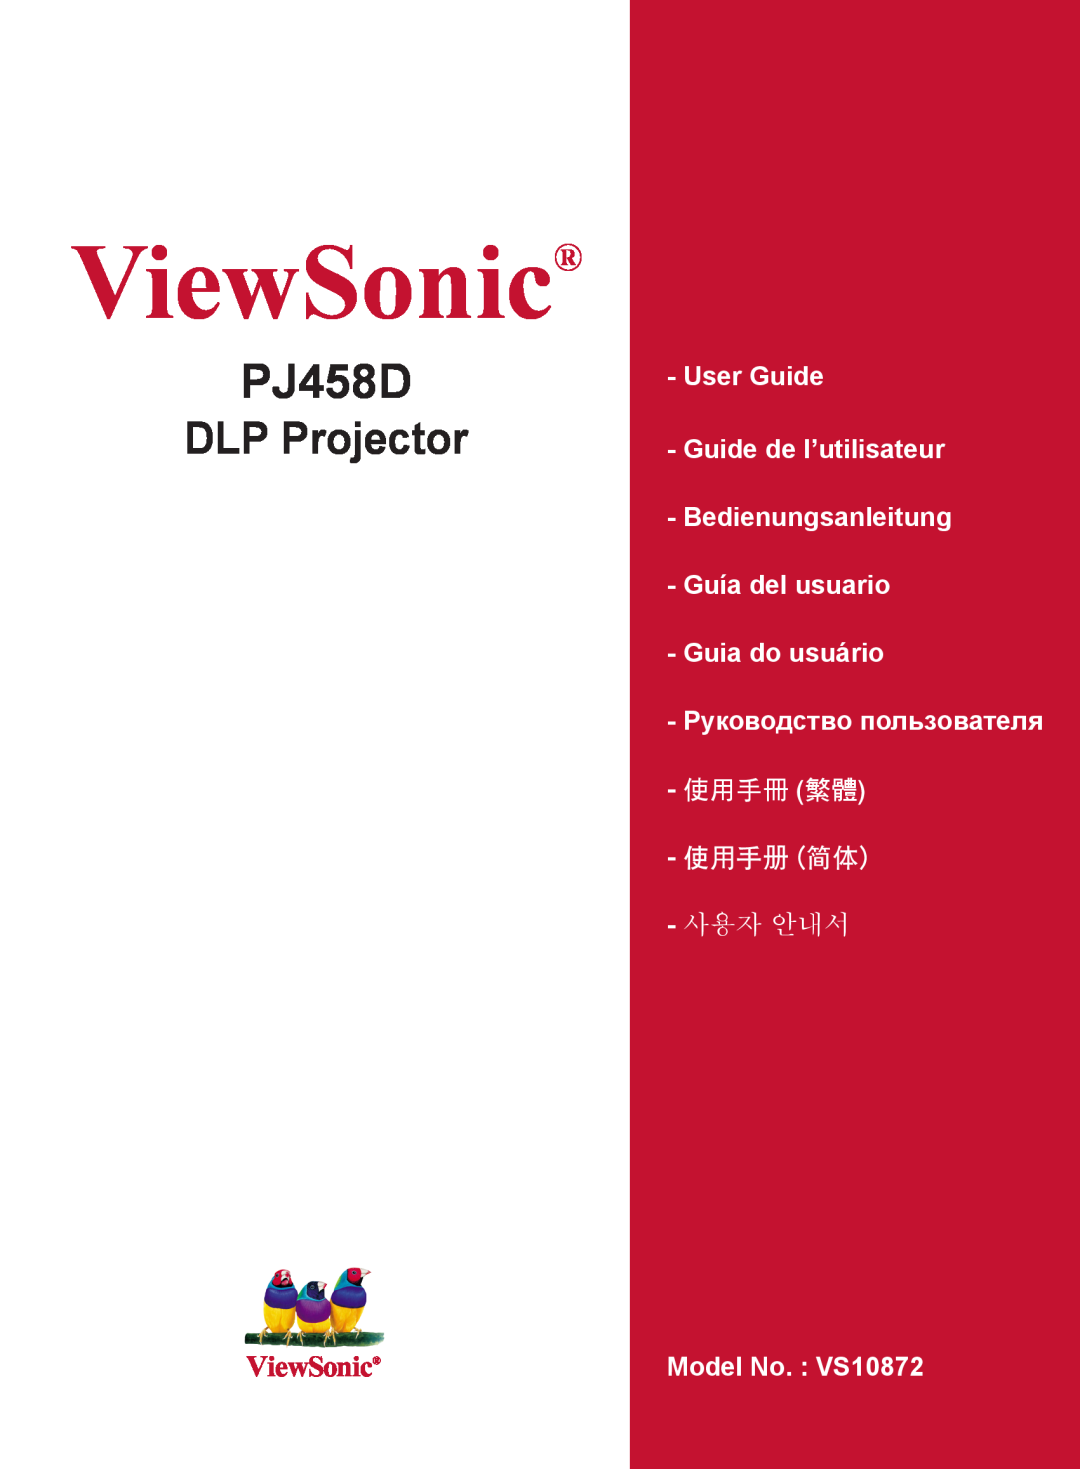 ViewSonic VS10872 manual ViewSonic, PJ458D, DLP Projector, User Guide Guide de l’utilisateur, 使用手冊 繁體 使用手冊 簡體, 사용자 안내서 